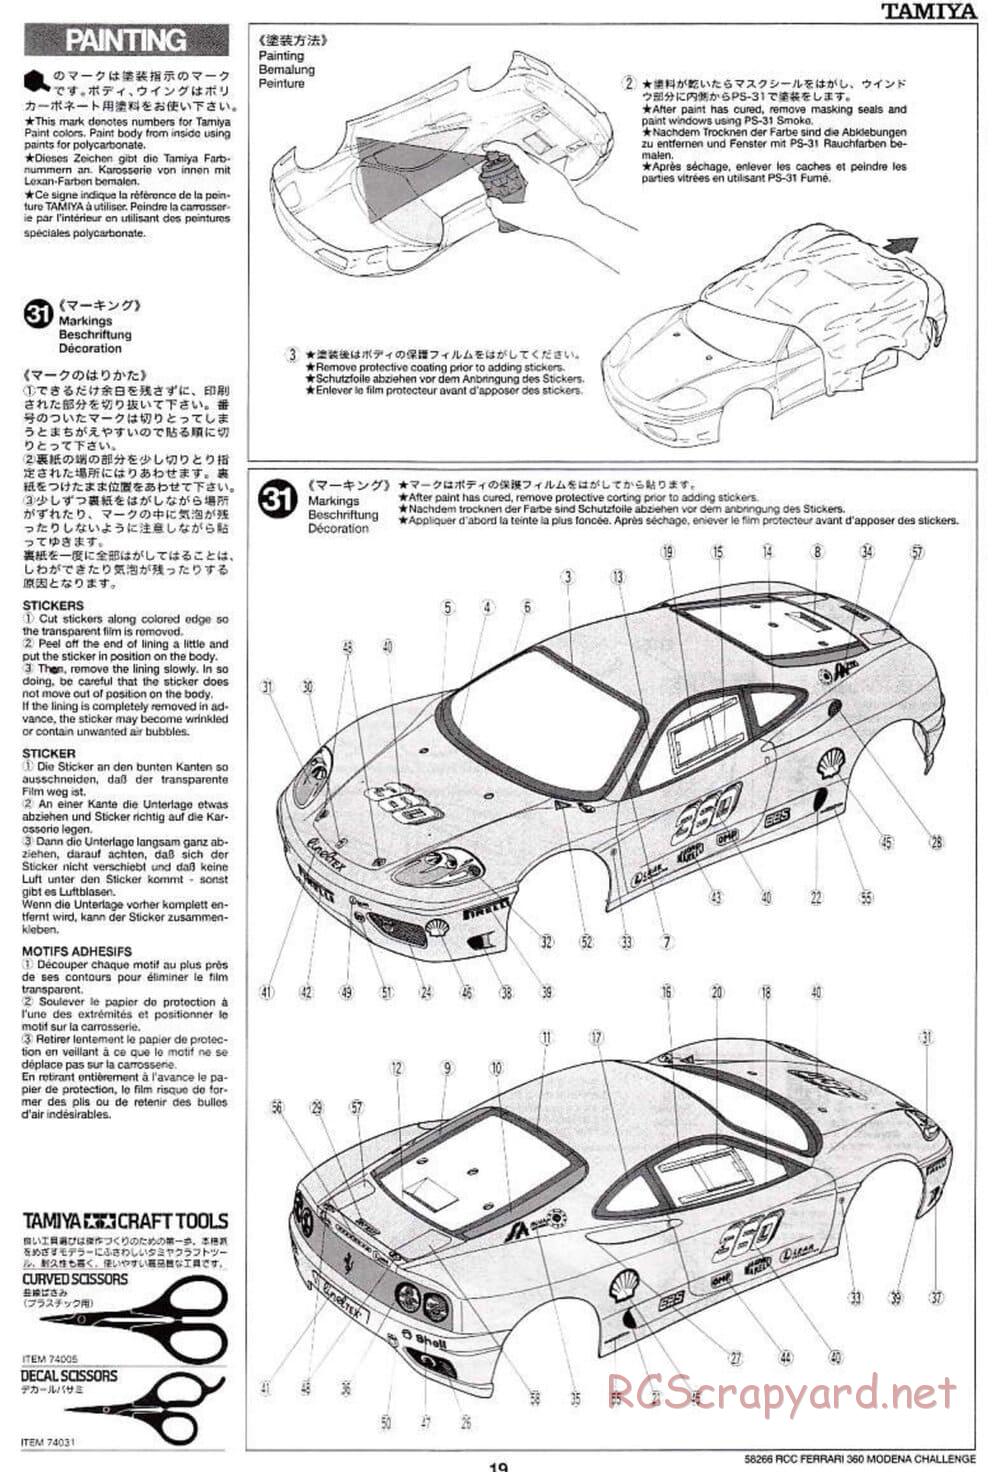 Tamiya - Ferrari 360 Modena Challenge - TA-04 Chassis - Manual - Page 19